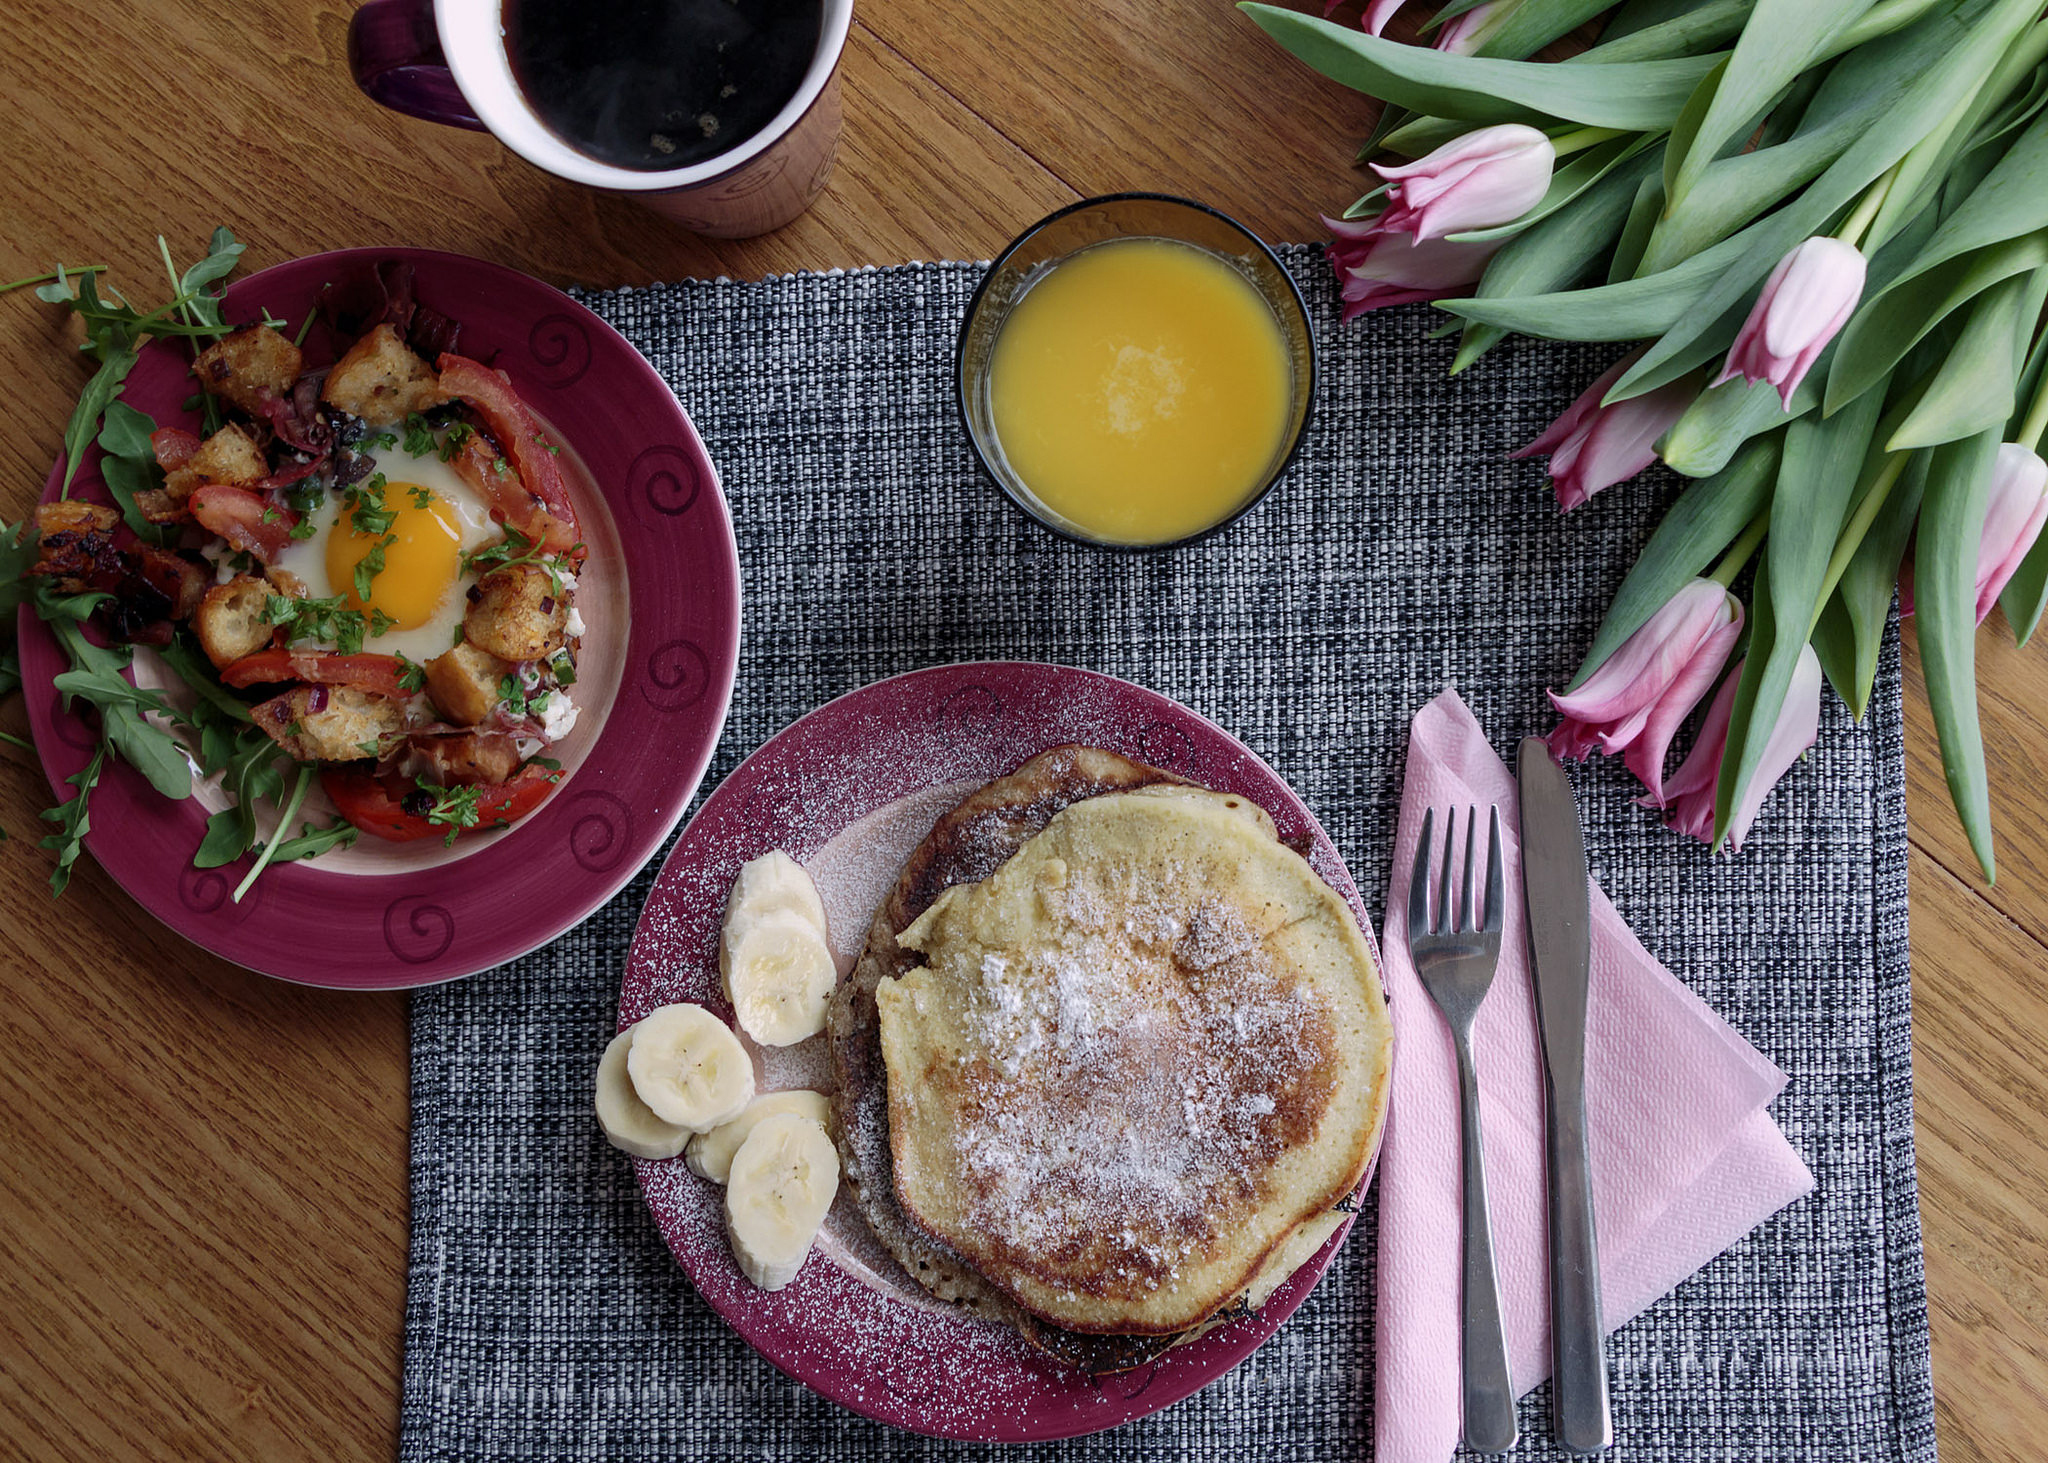 Села завтрак. Завтрак. Весенний завтрак. Завтрак с цветами. Завтрак на столе.